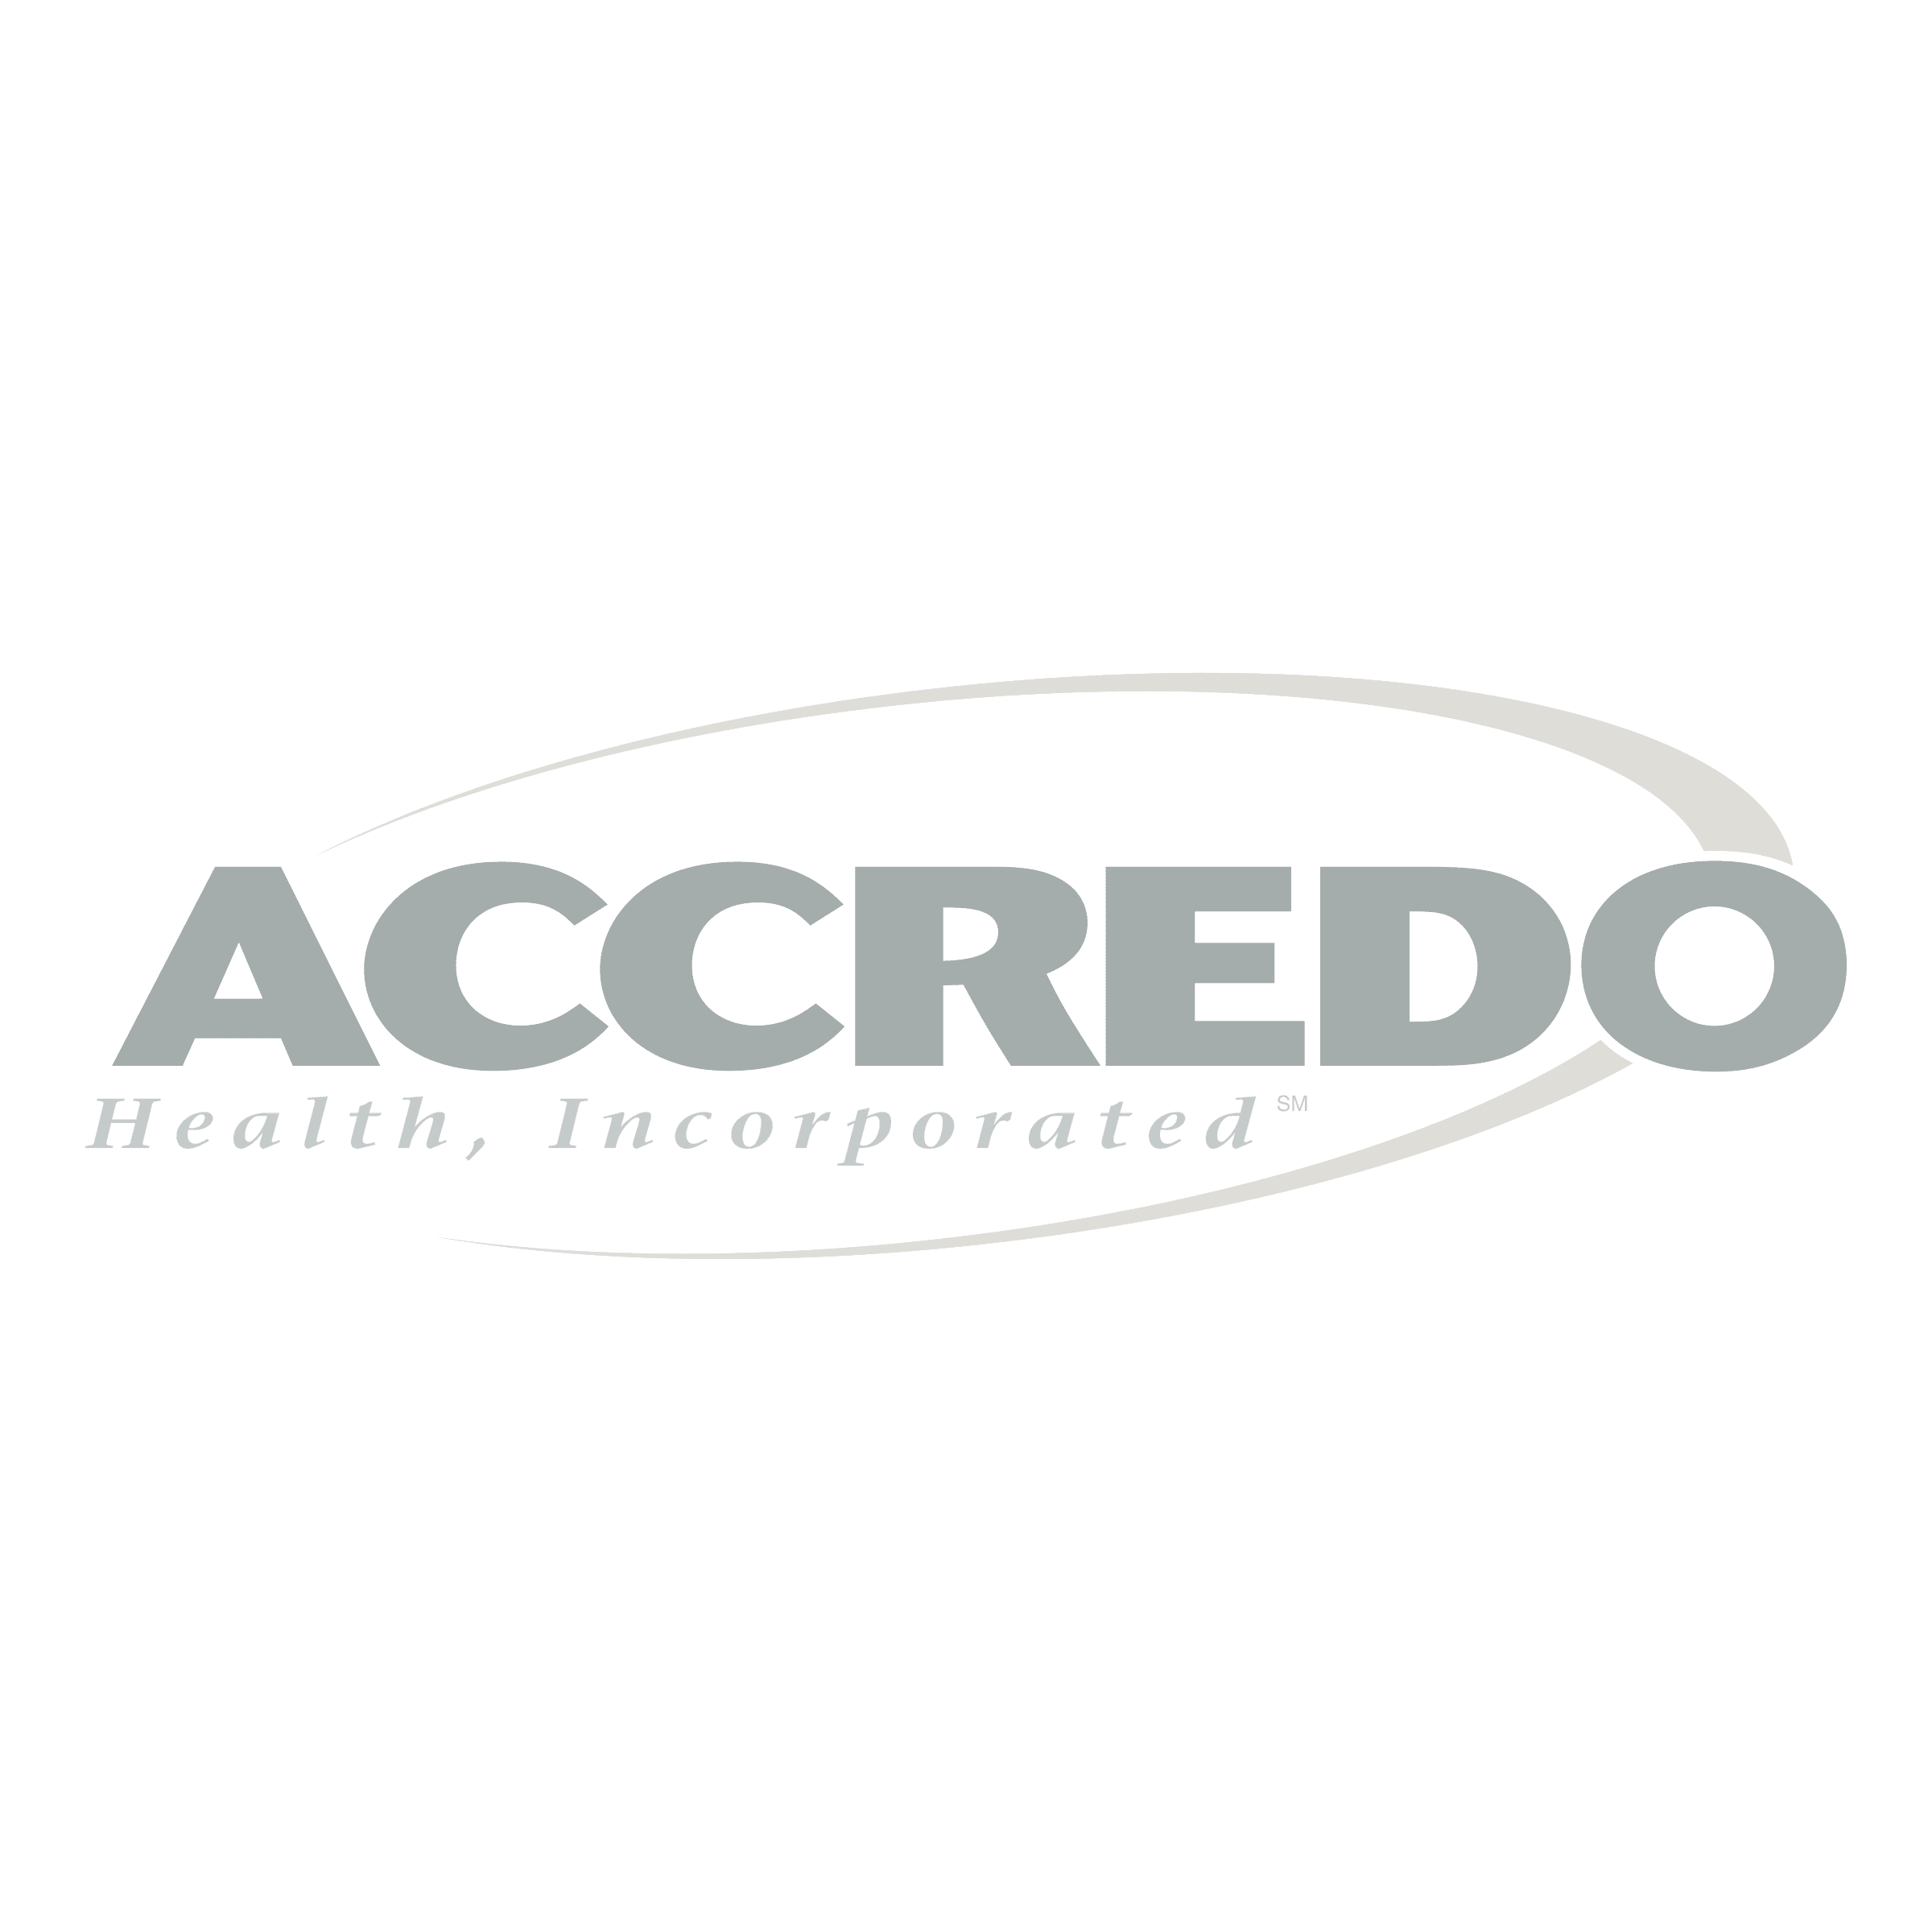 Accredo Health